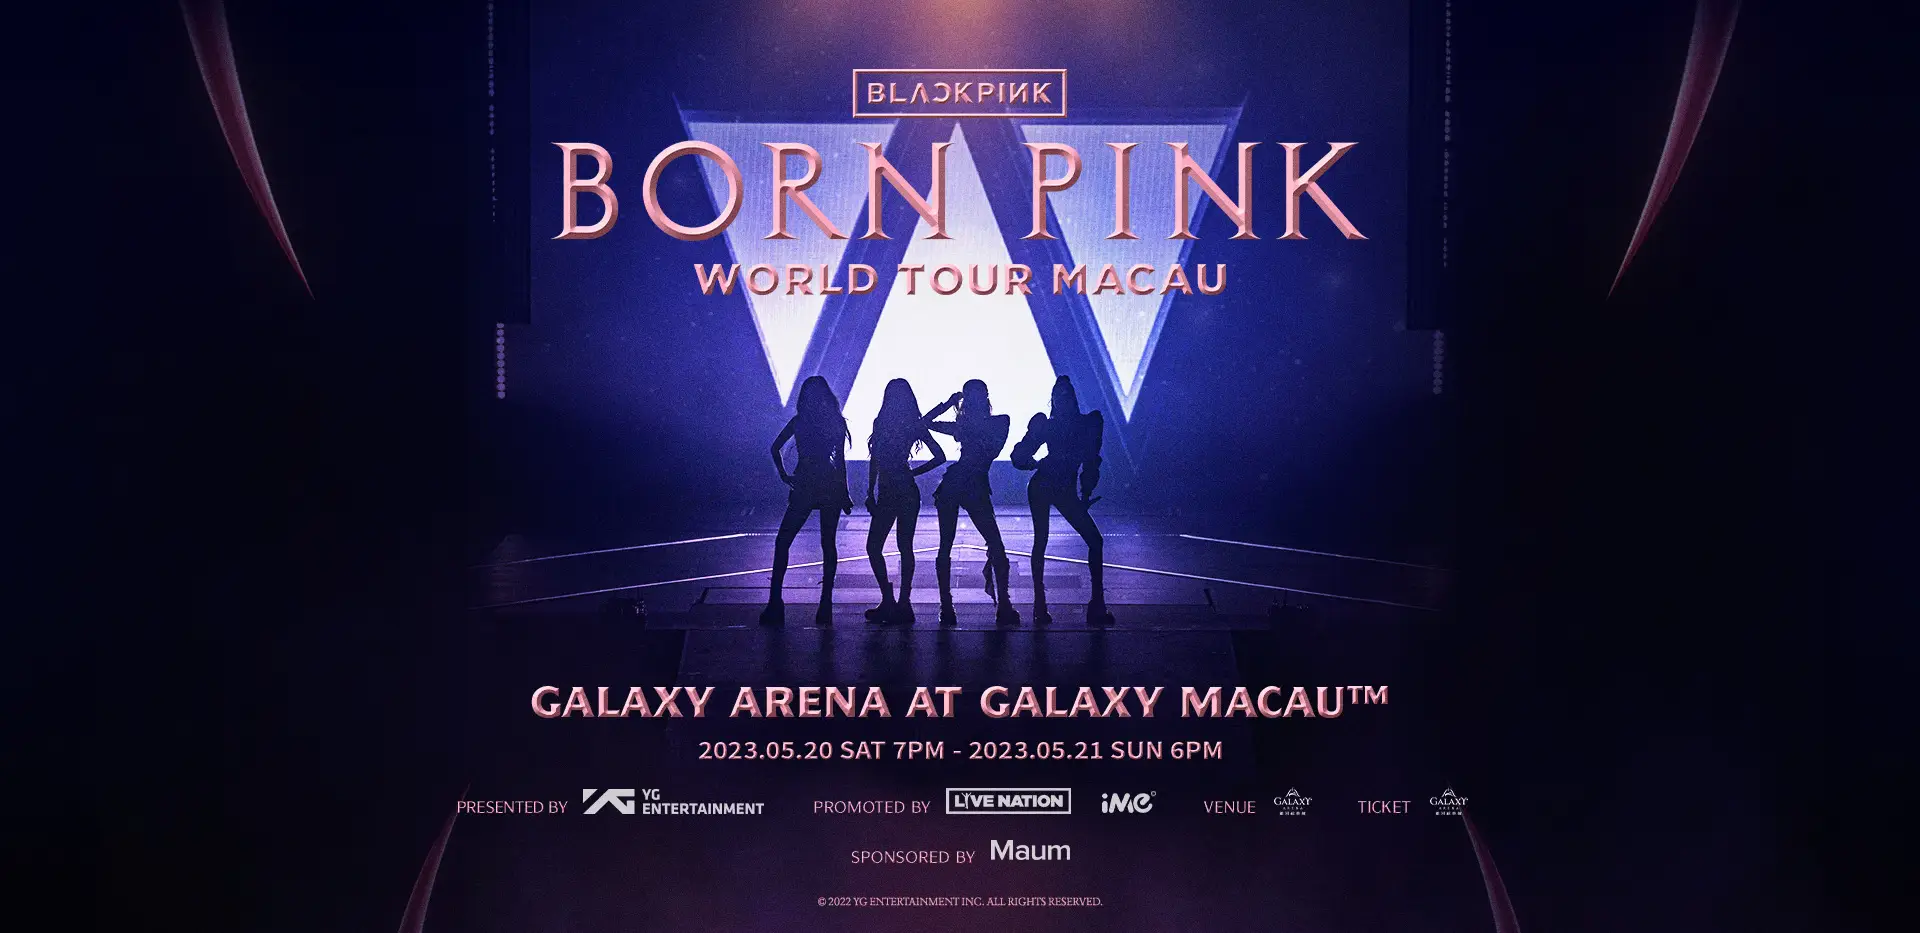 BLACKPINK WORLD TOUR [BORN PINK] MACAU